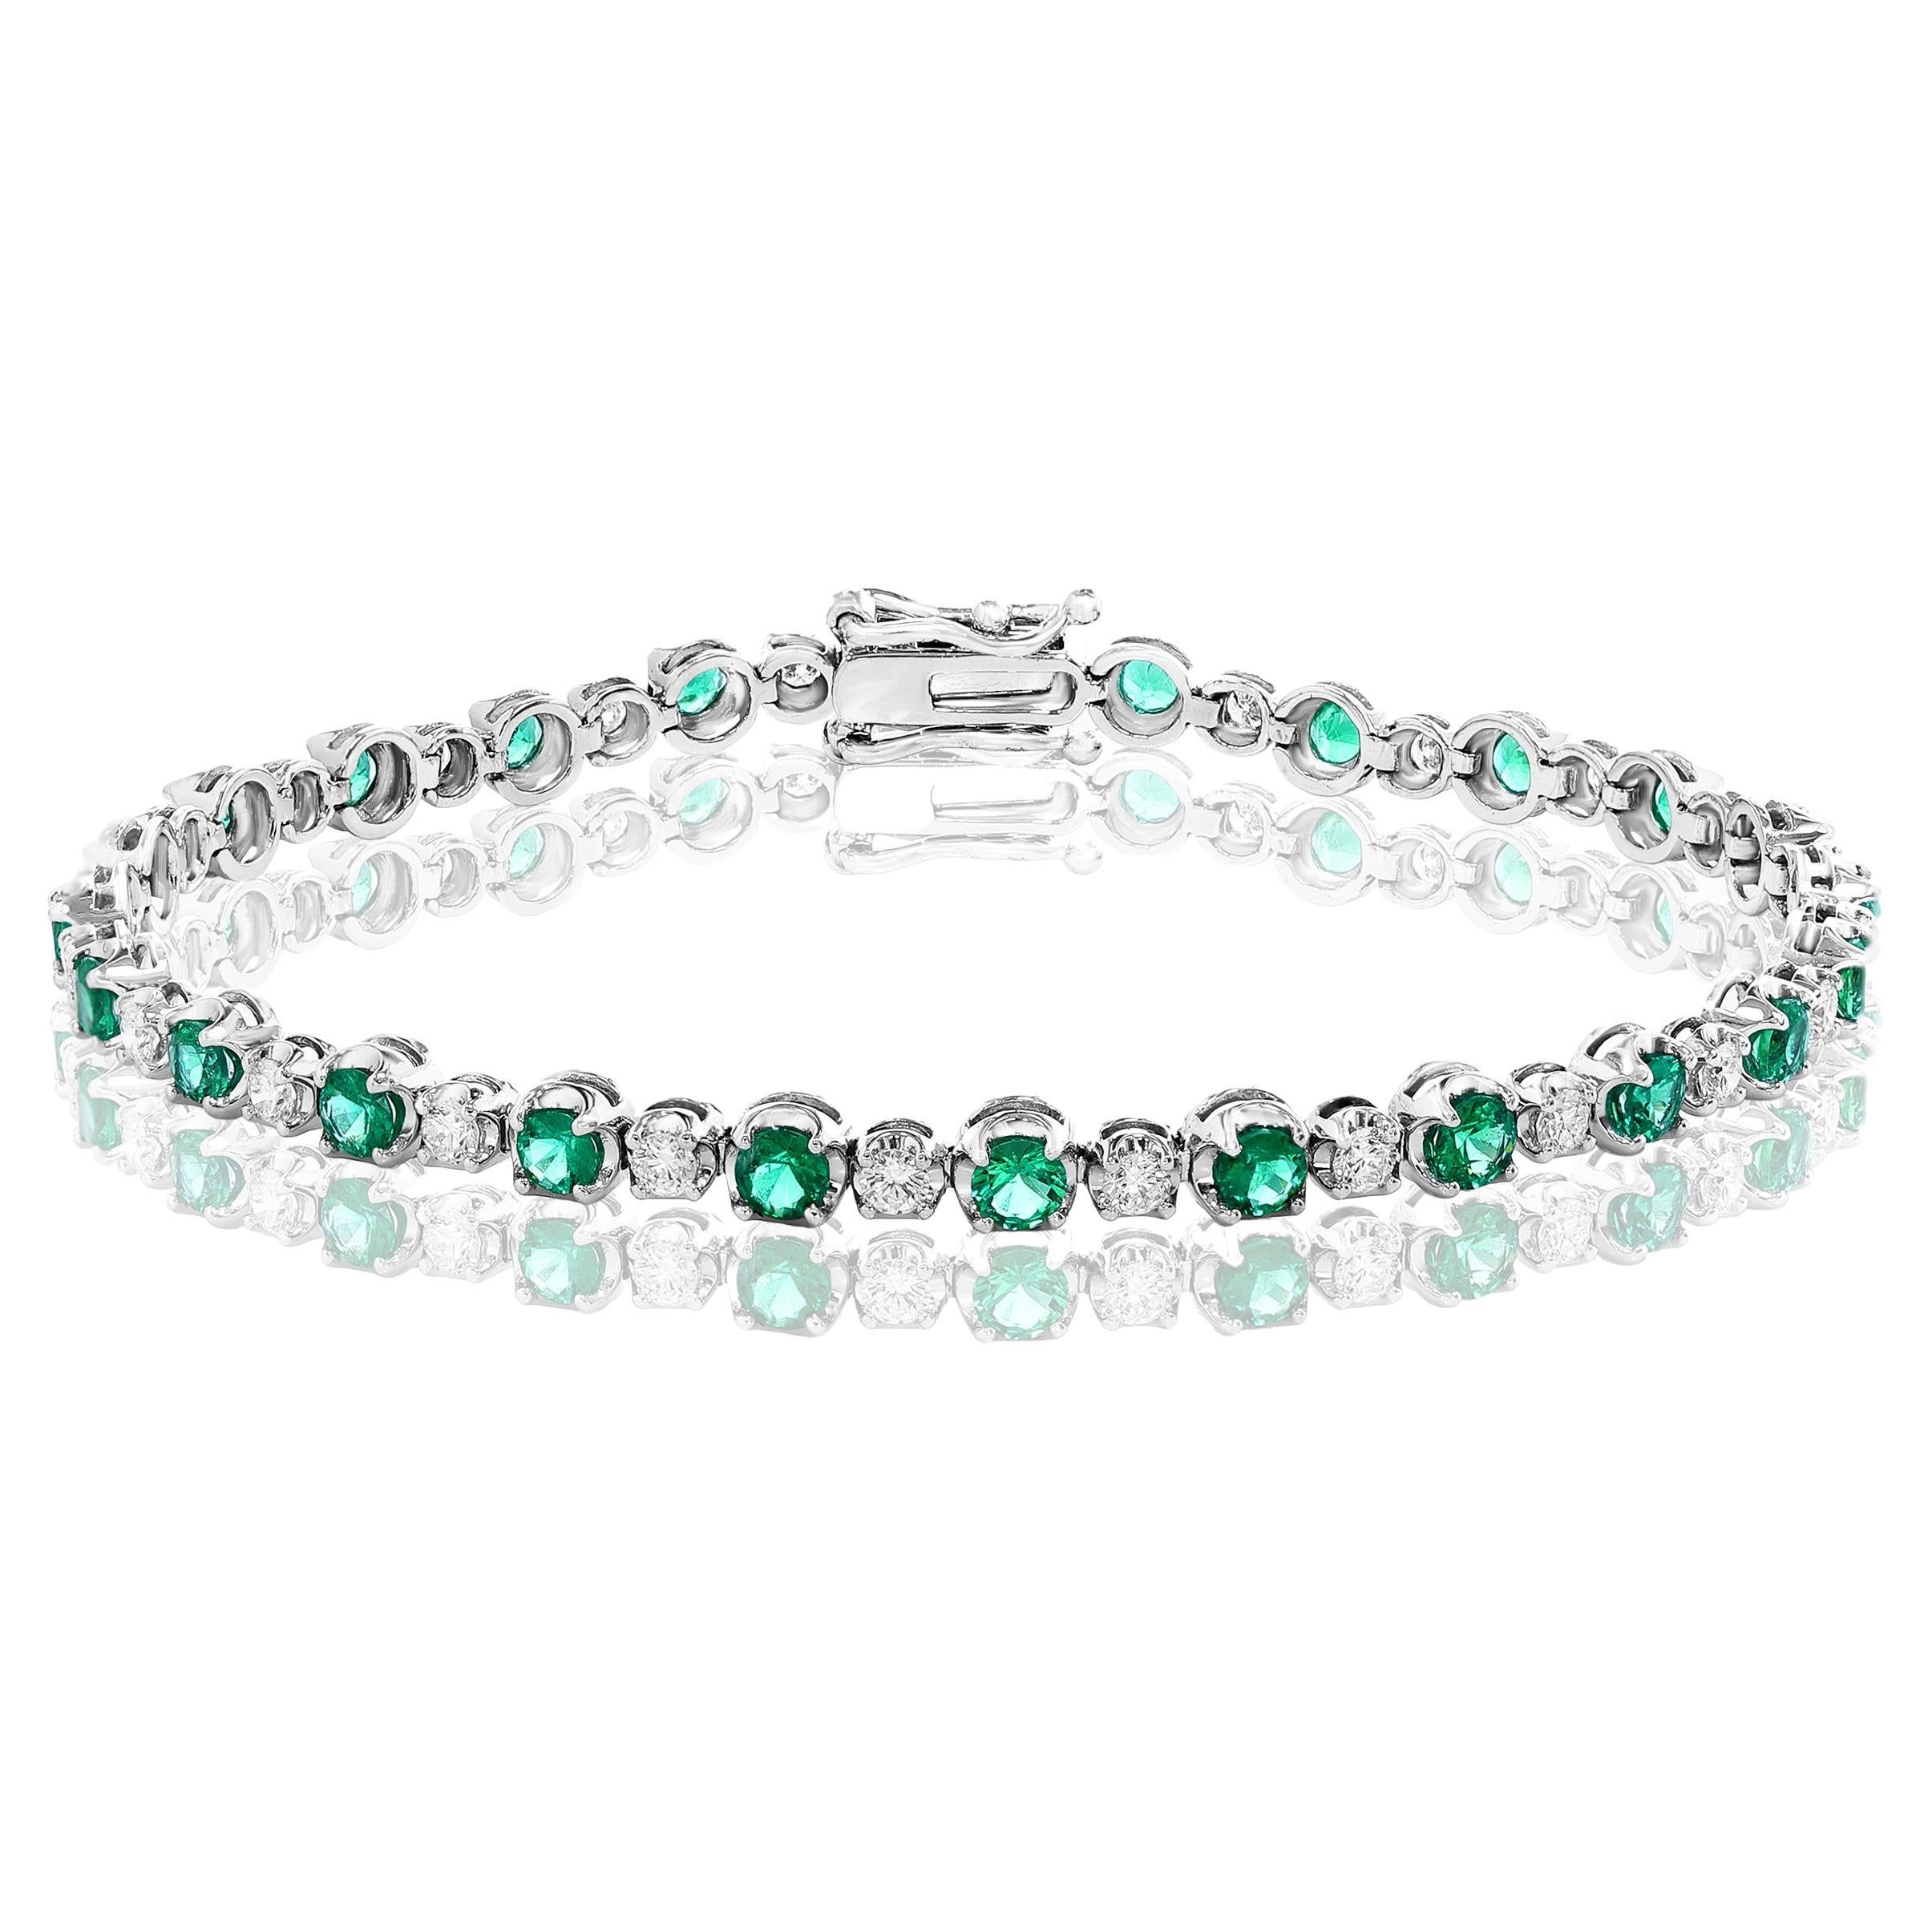 3.42 Carat Brilliant Cut Emerald and Diamond Bracelet in 14k White Gold For Sale